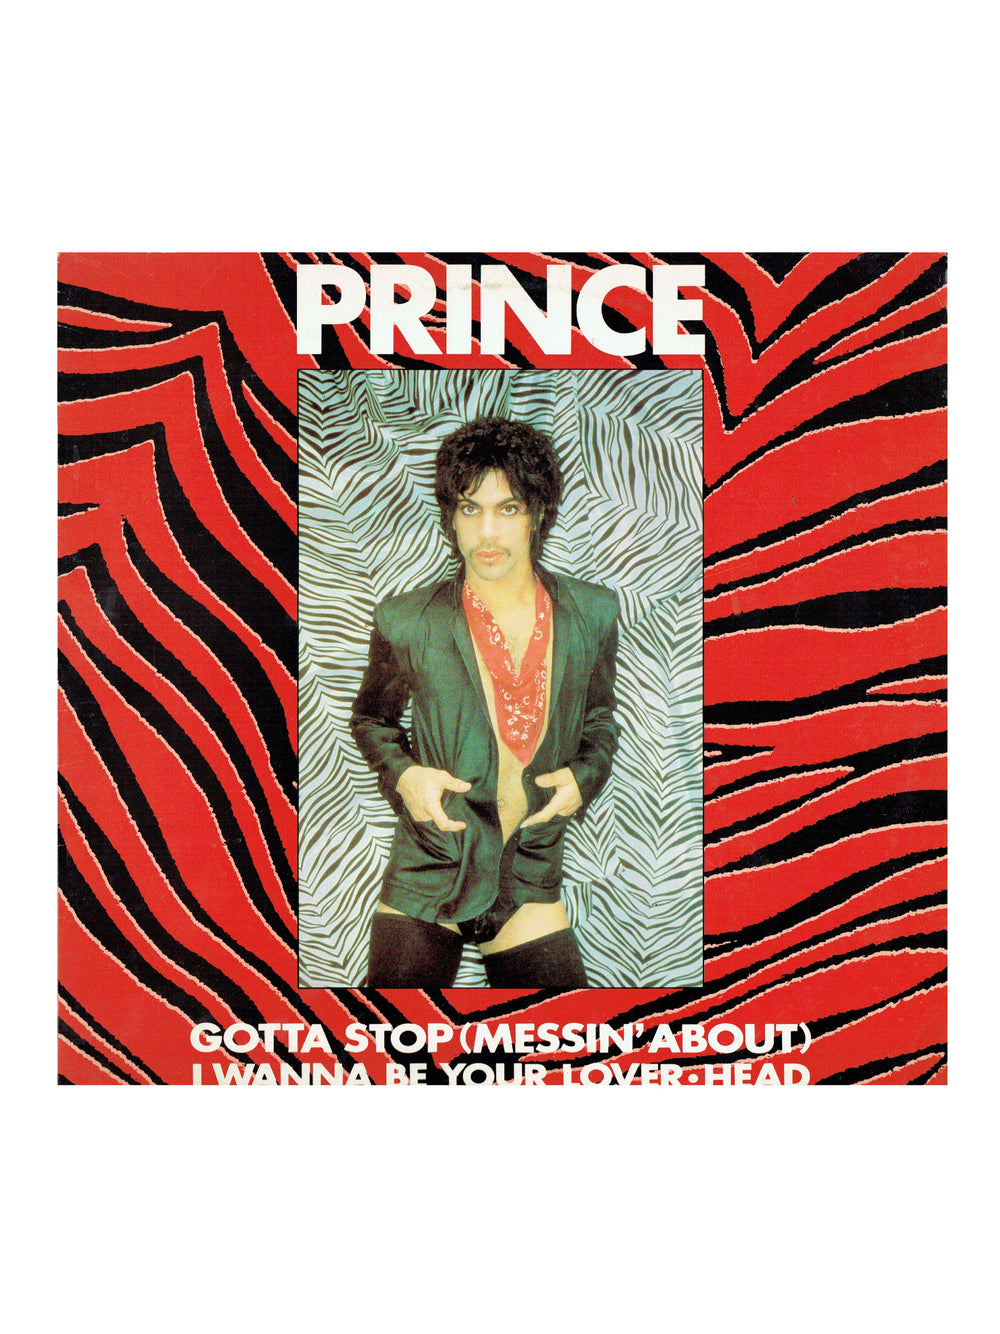 Prince – Gotta Stop (Messin' About) UK 12 Vinyl Single Rare